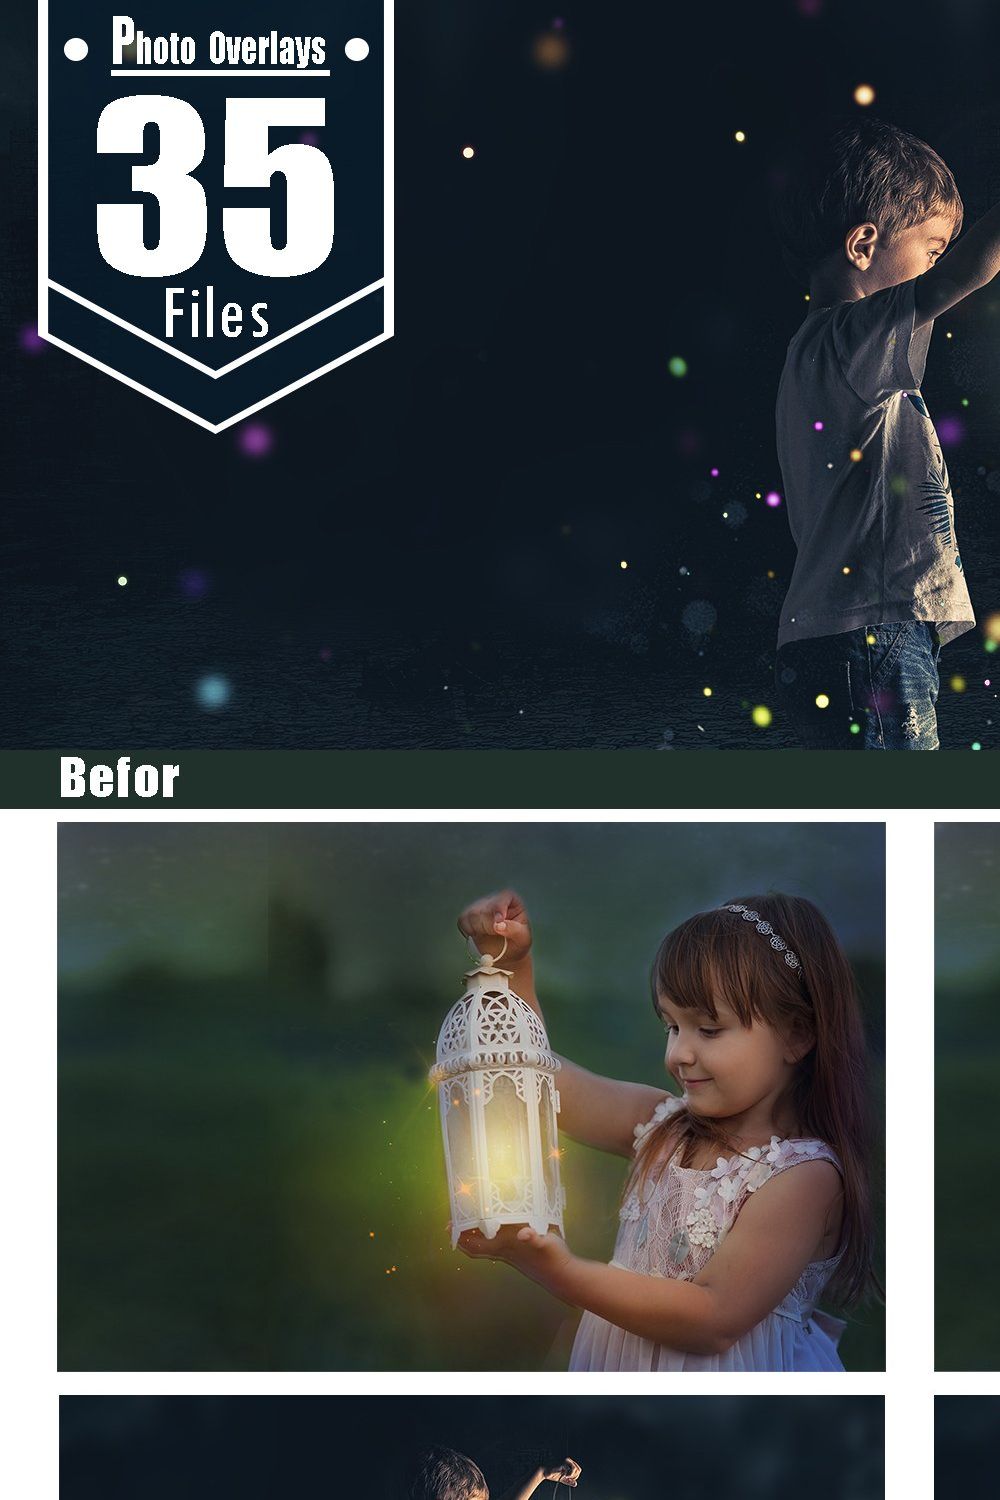 35 magic shine light photo overlays pinterest preview image.